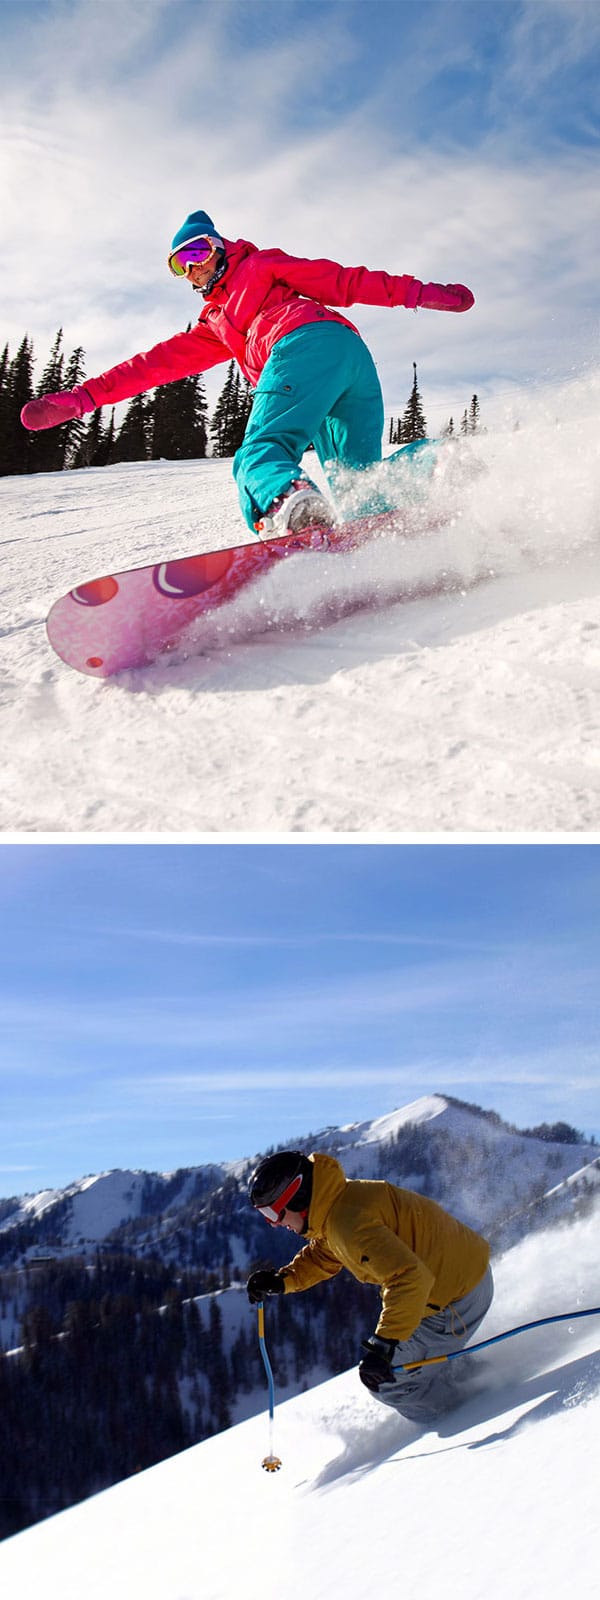 Ski-and-snowboard-rental-options